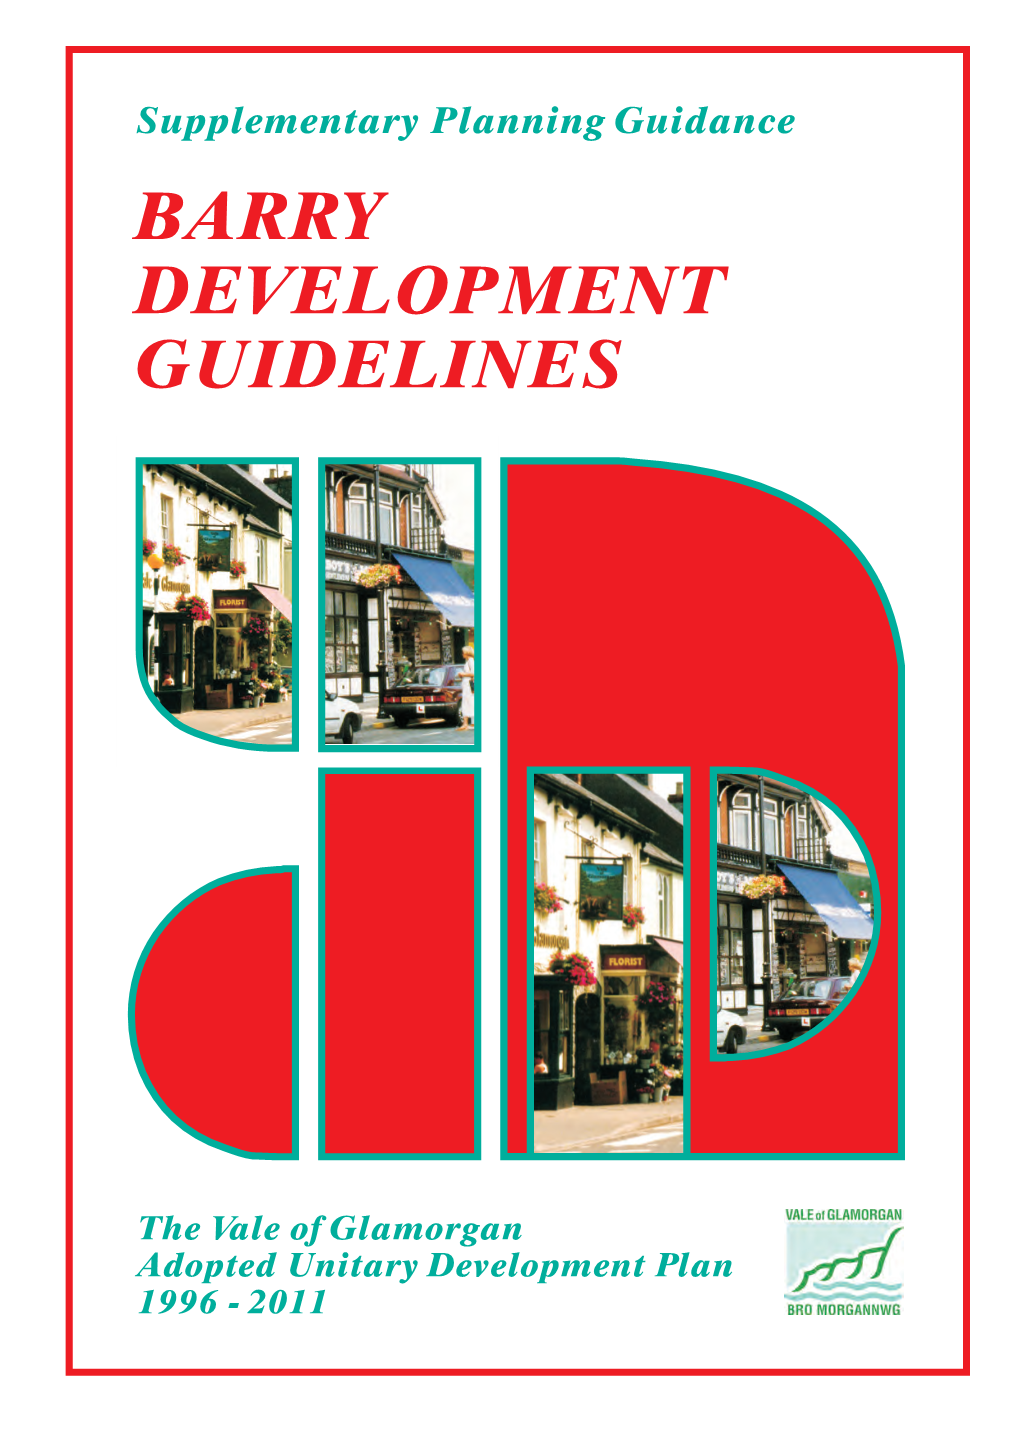 Barry Development Guidelines